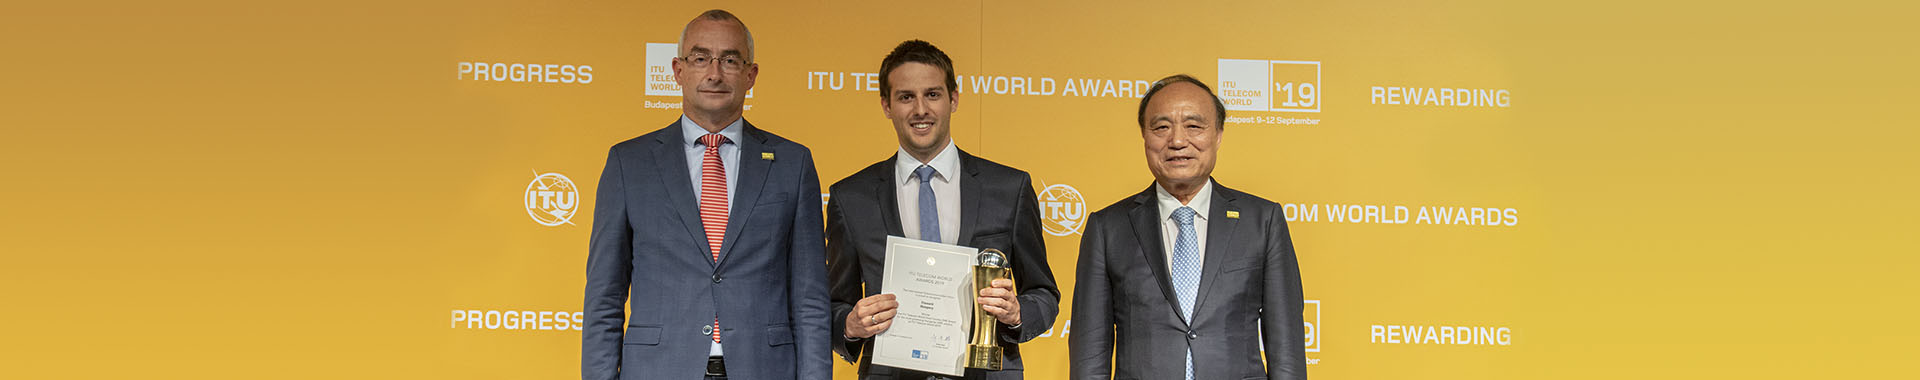 Tresorit wins ITU Telecom World Award